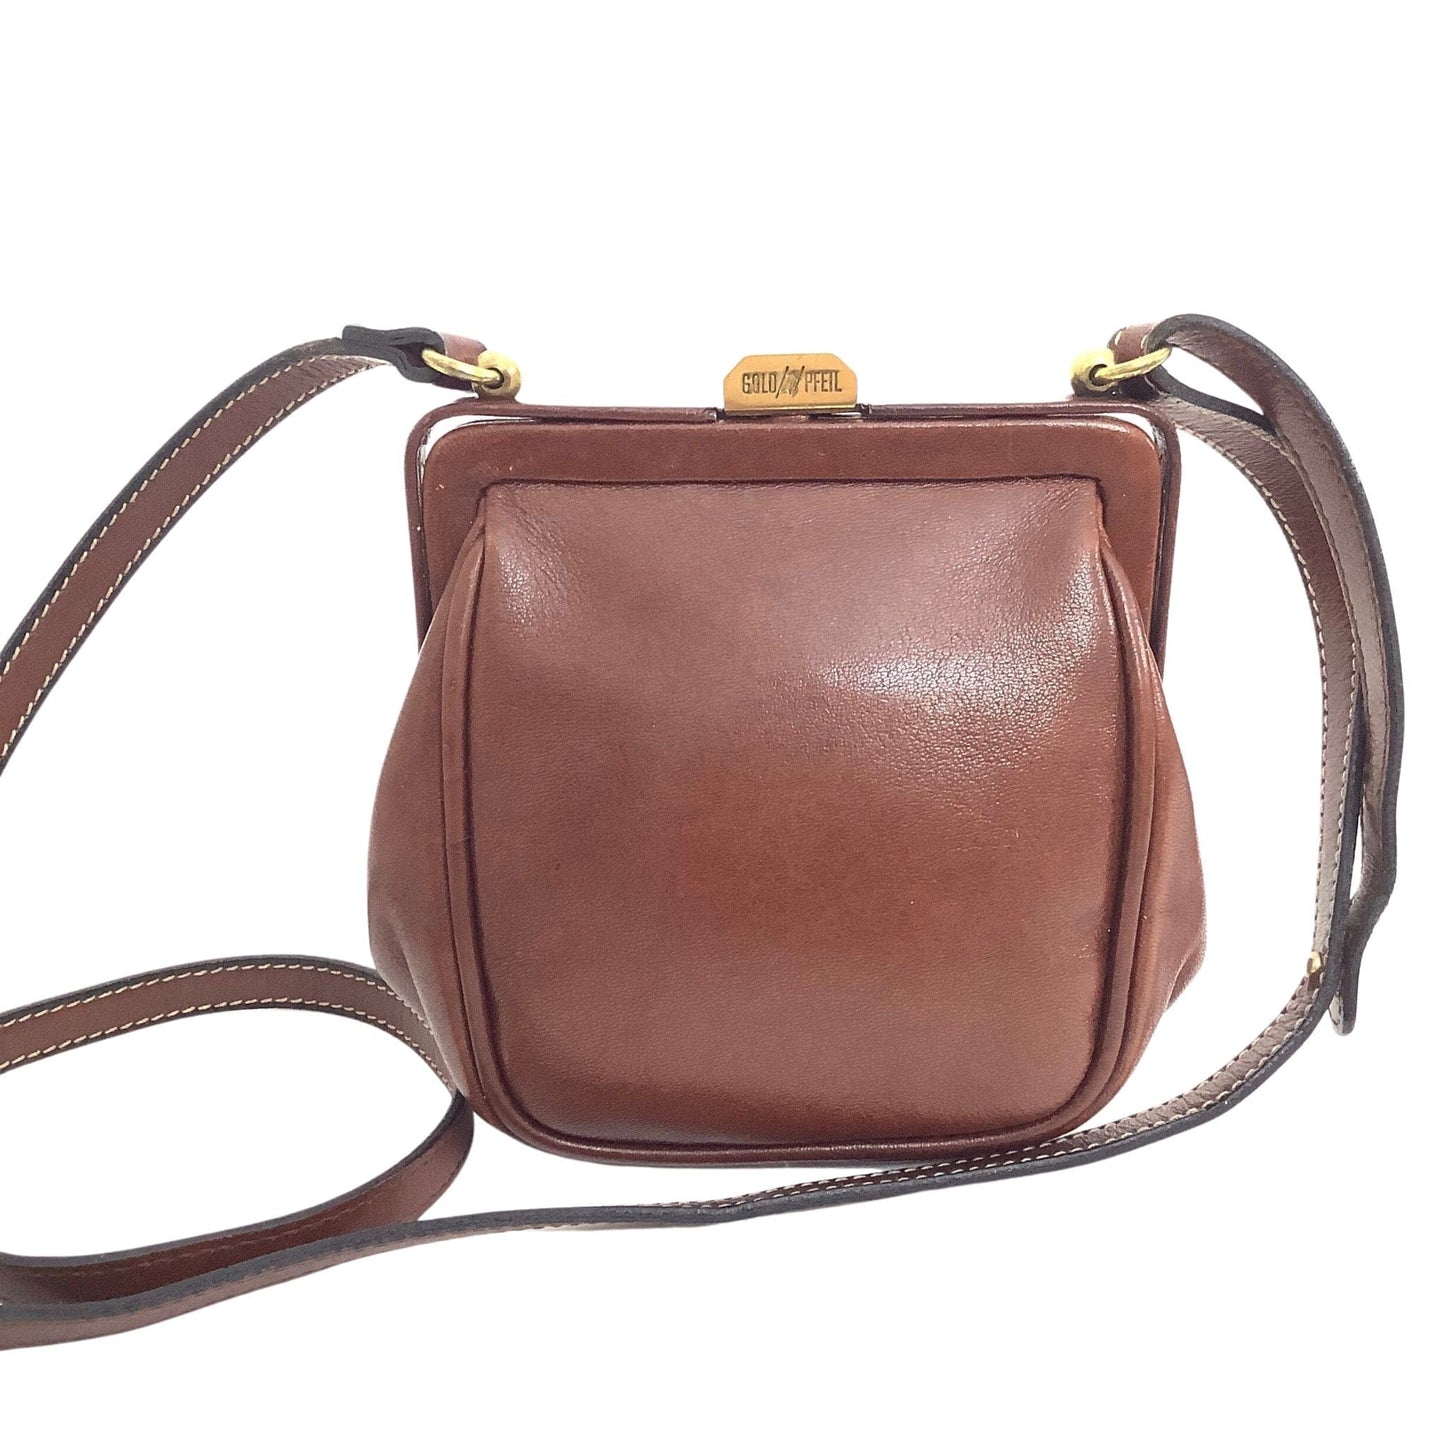 Gold Pfeil Crossbody Bag Brown / Leather / Vintage 1990s